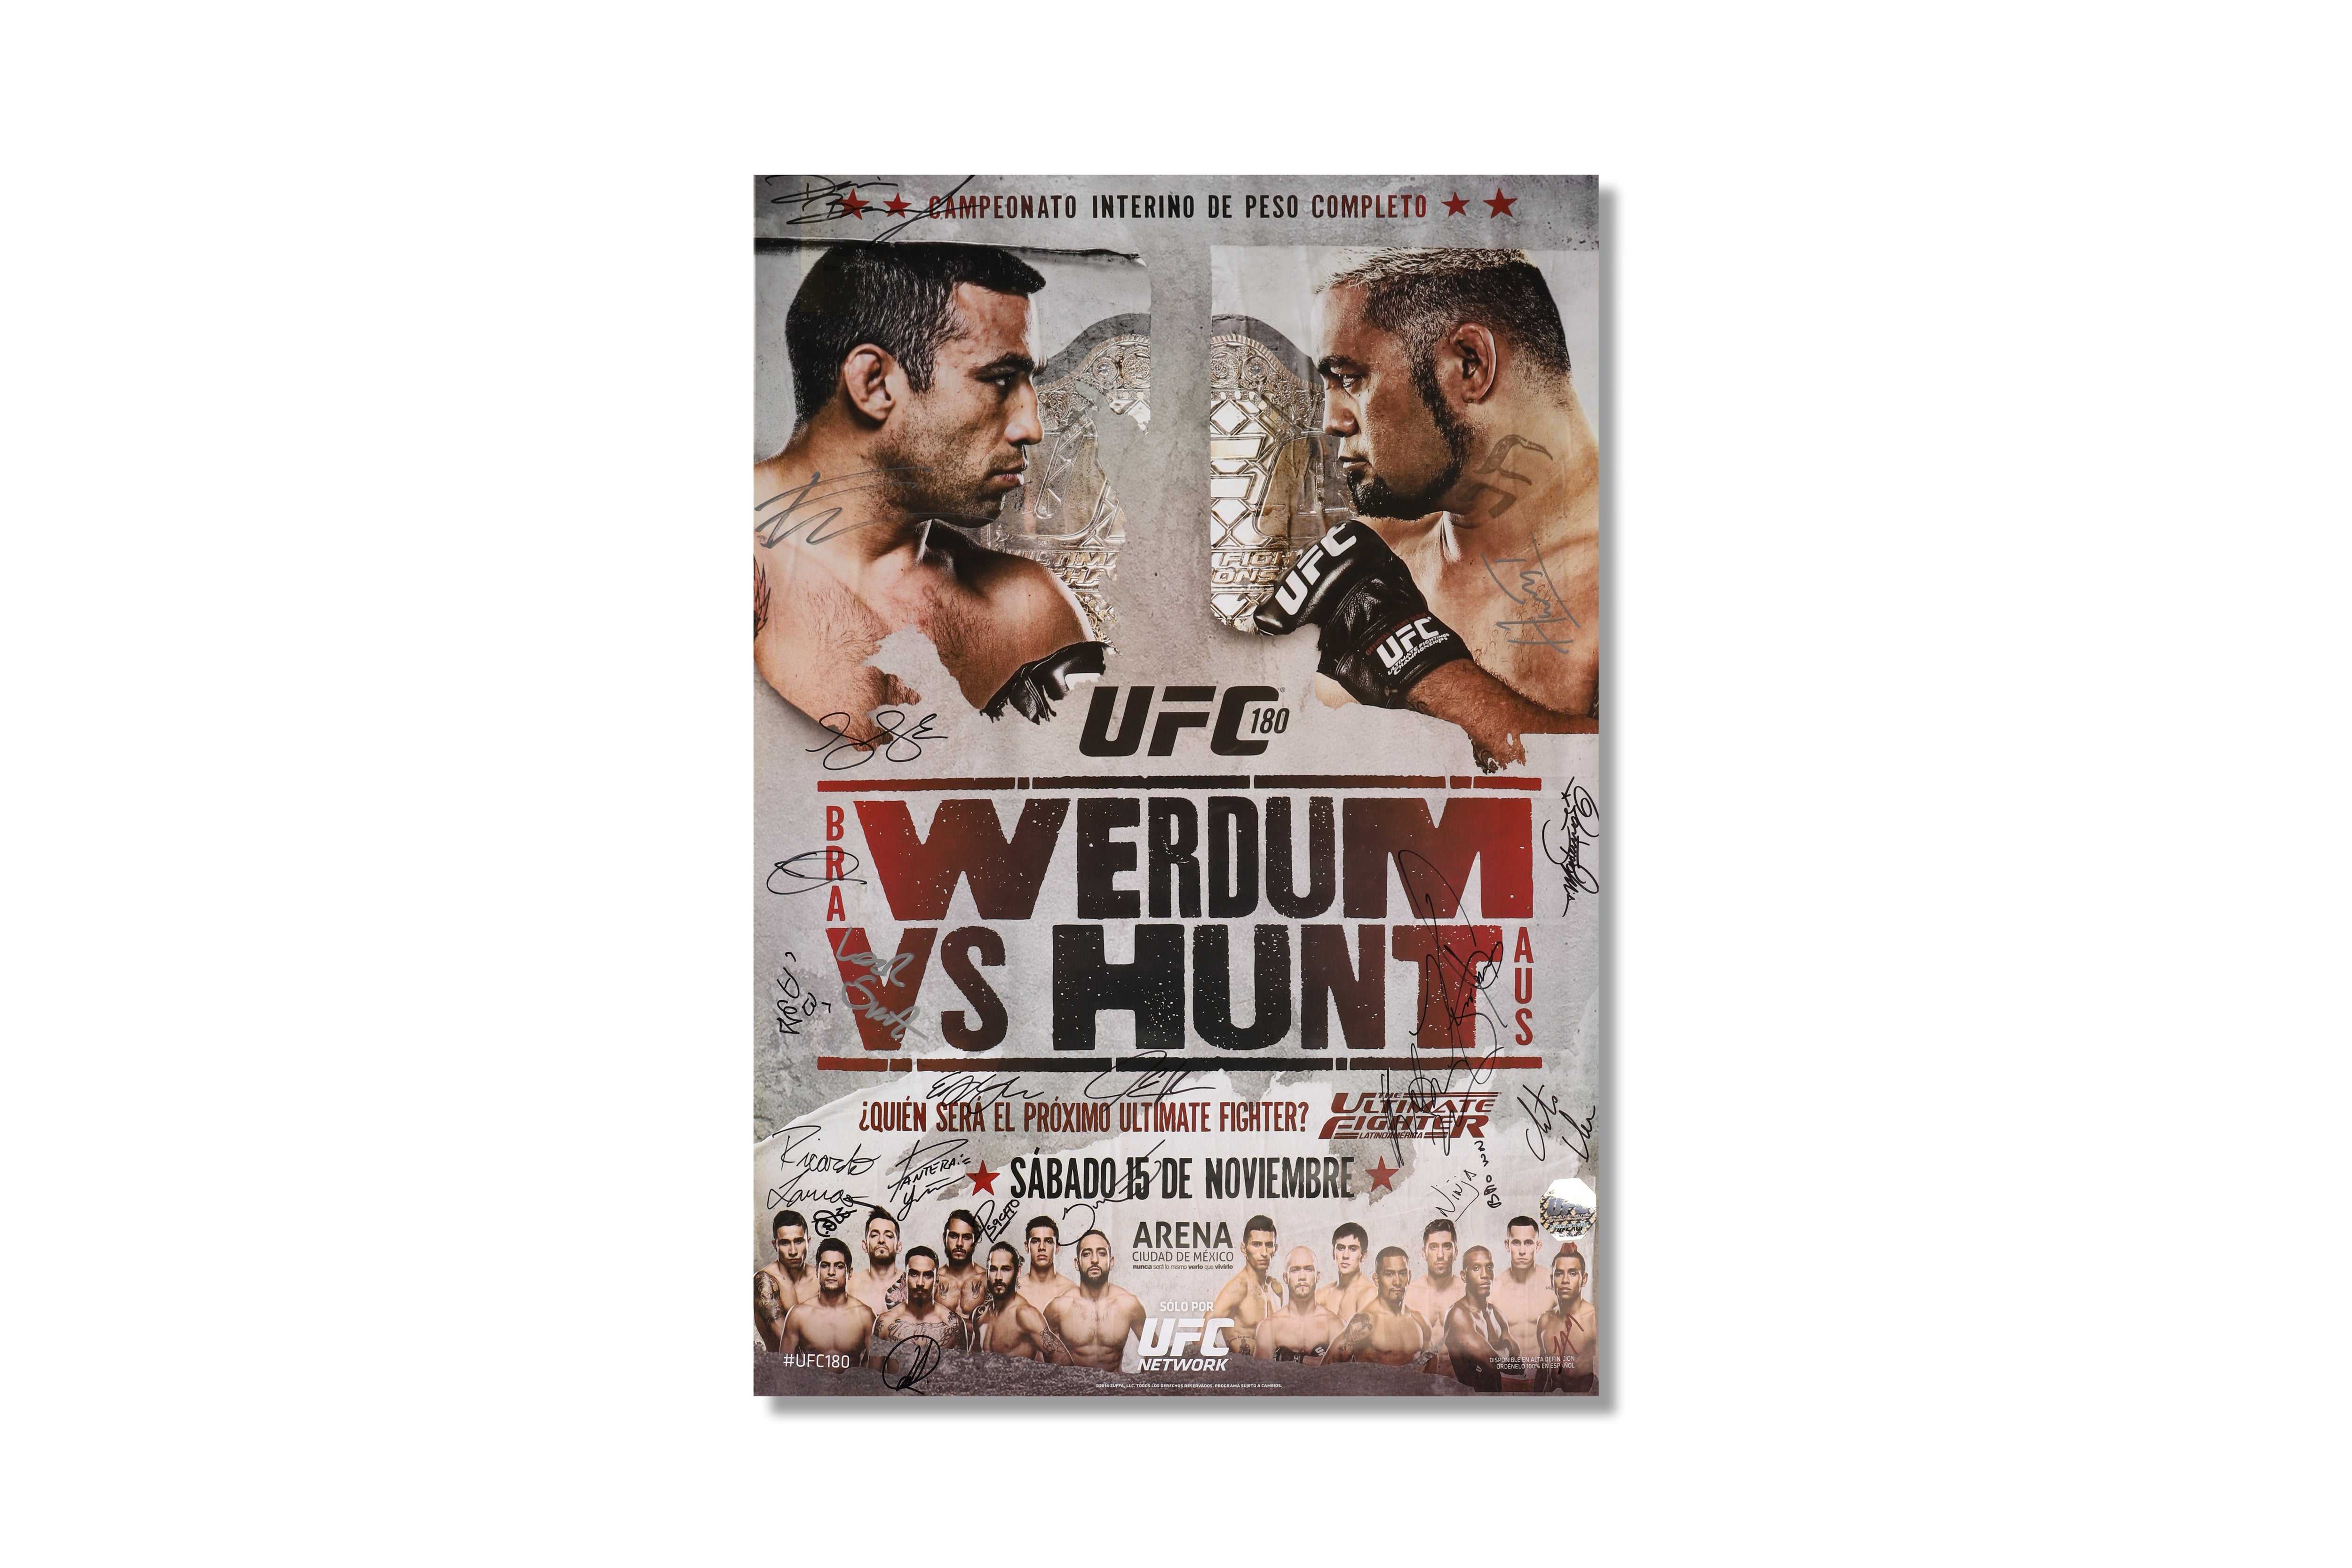 UFC 180: Werdum vs Hunt Autographed Event Poster